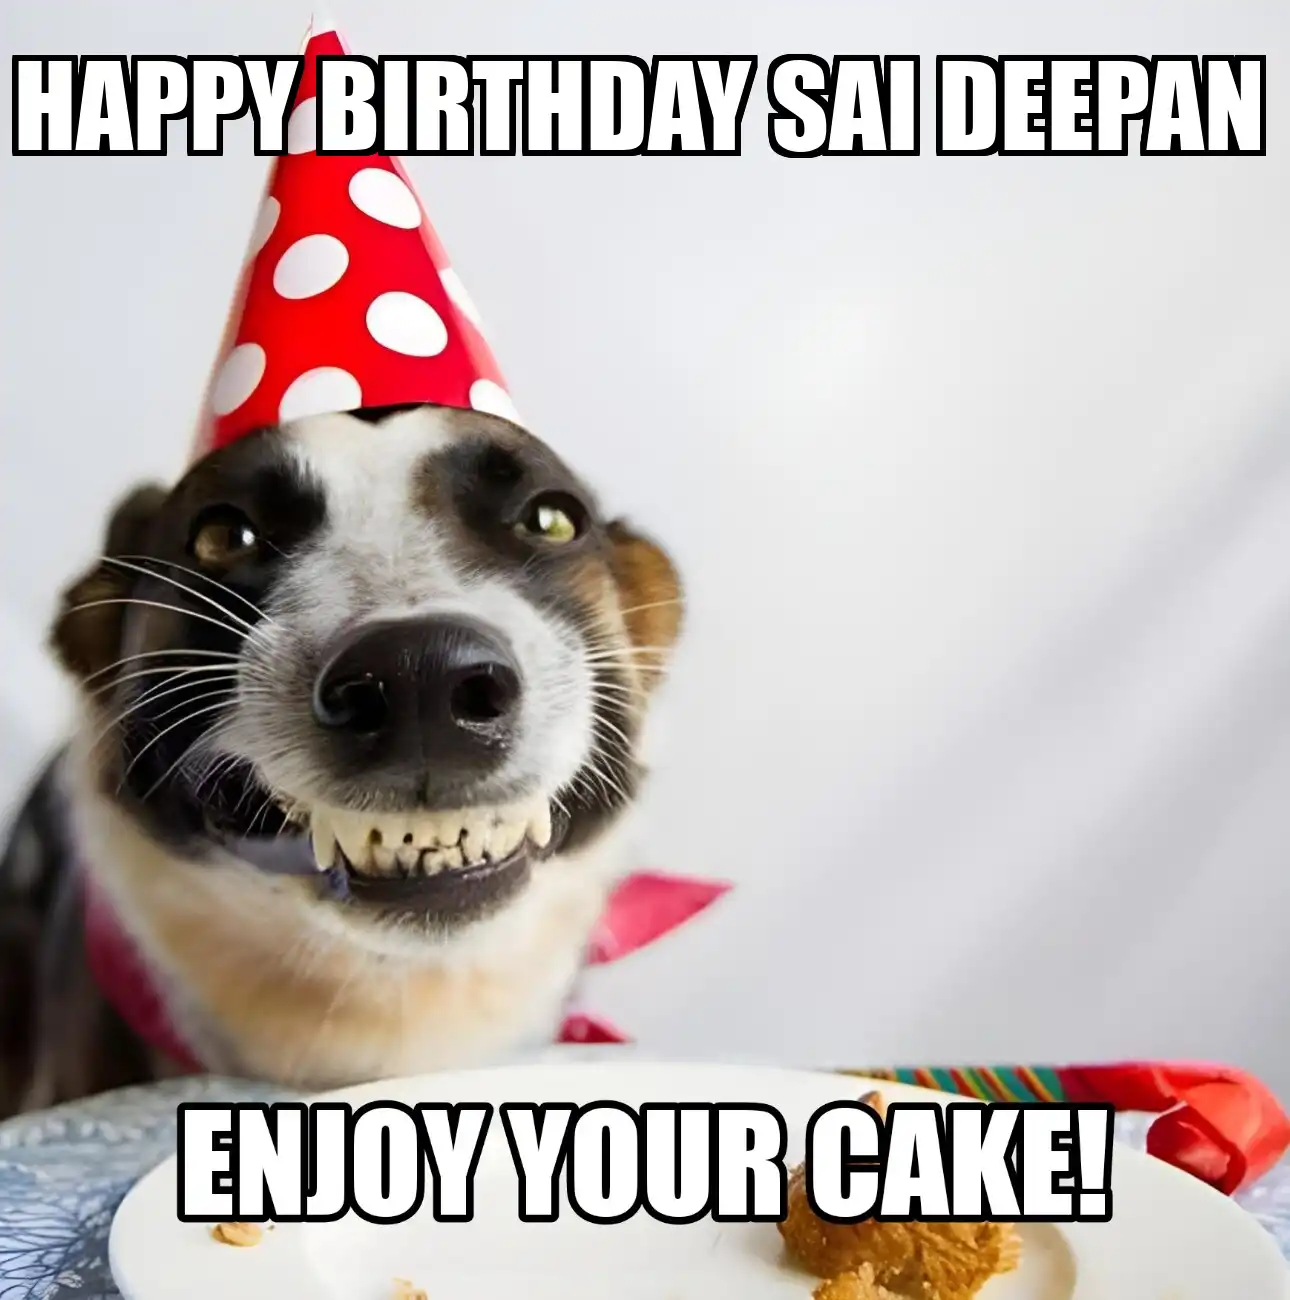 Happy Birthday Sai deepan Enjoy Your Cake Dog Meme